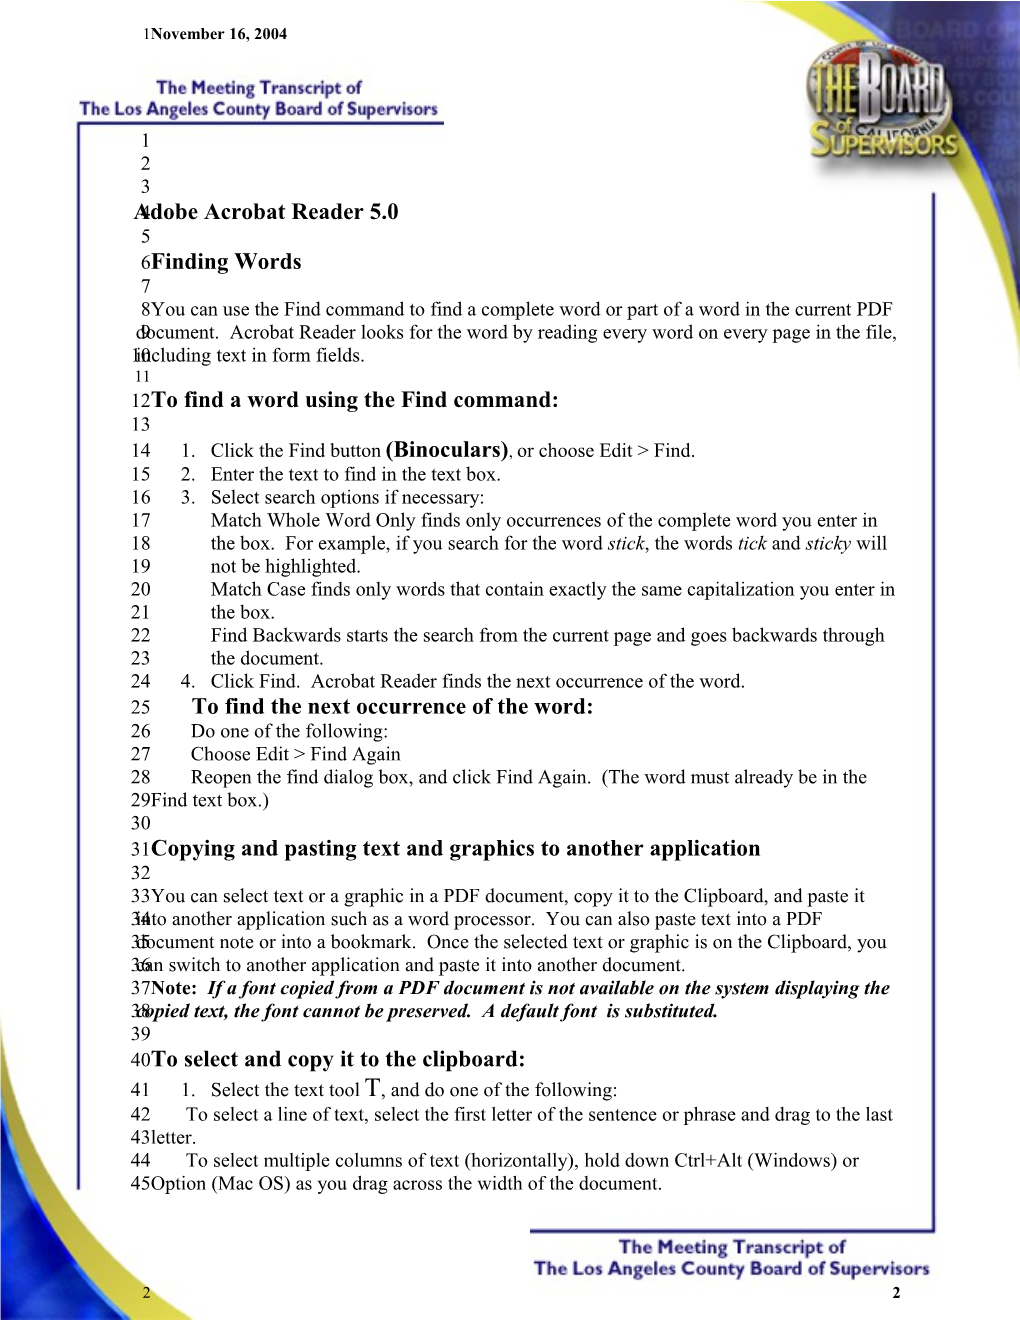 Adobe Acrobat Reader 5.0 s7